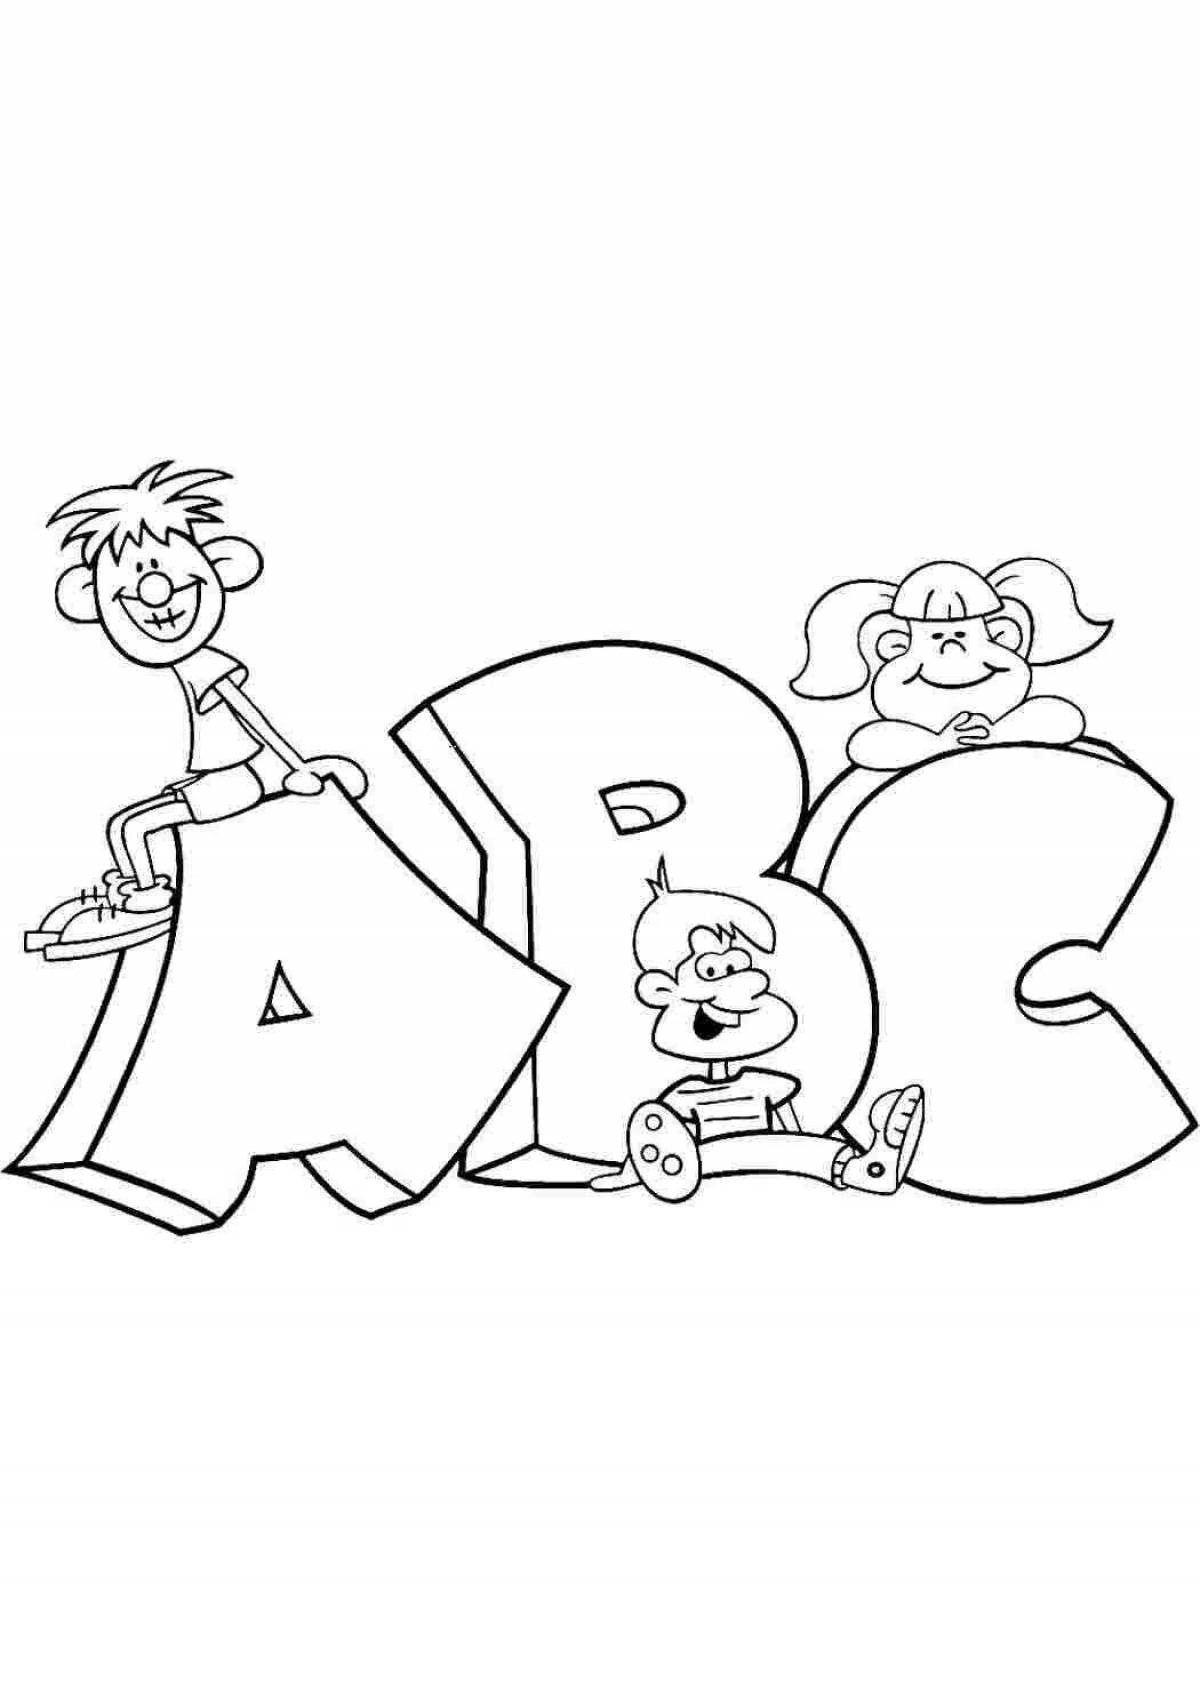 Joyful alphabet coloring book for kids